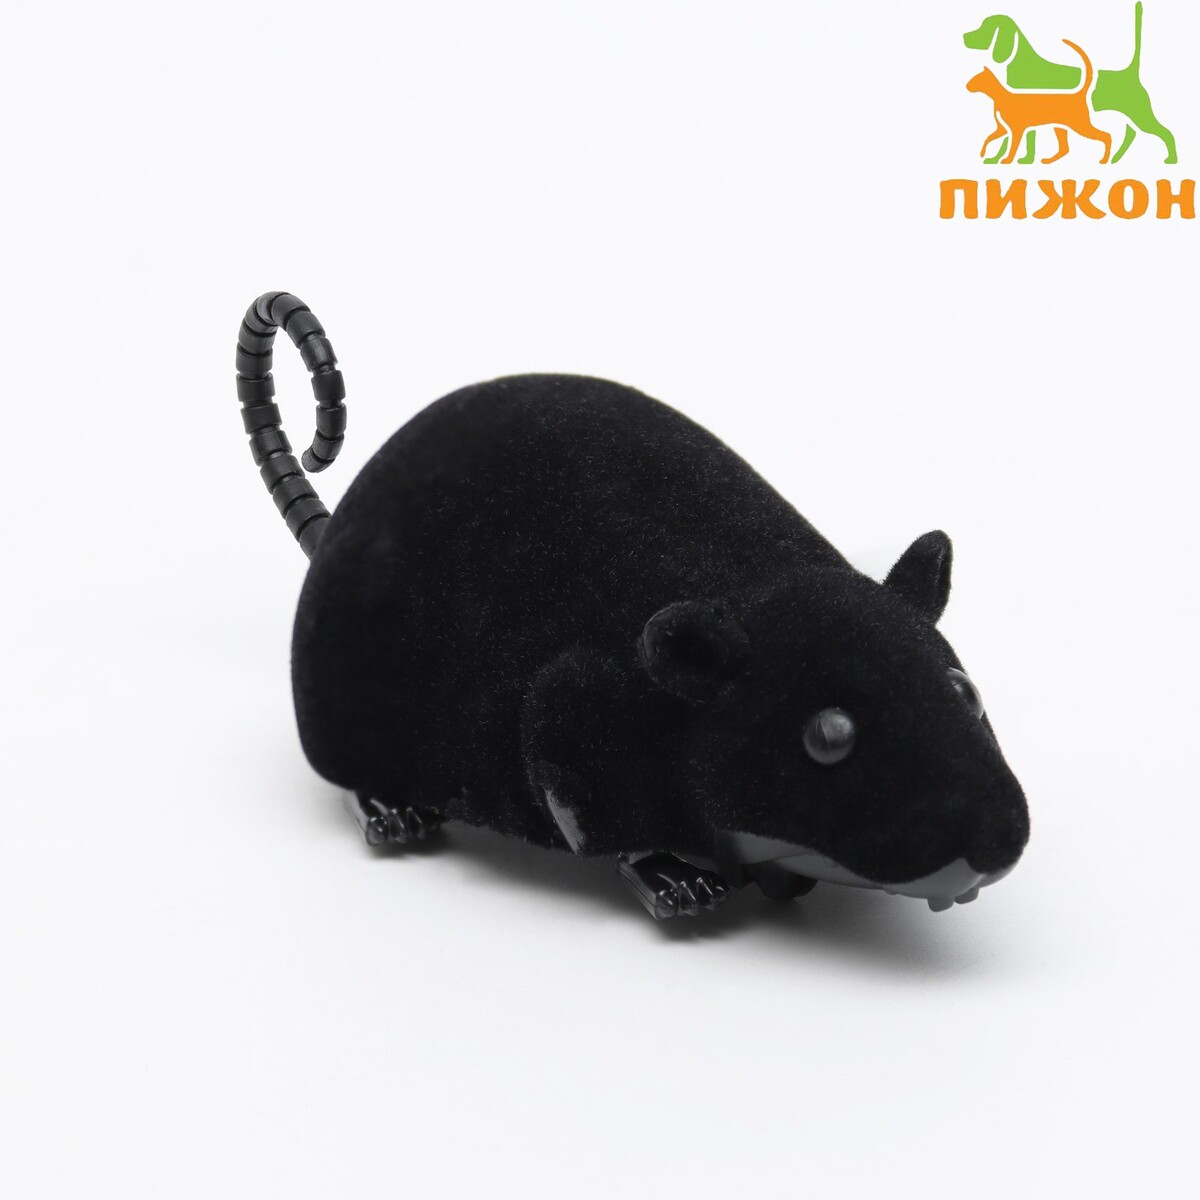 Мышь заводная бархатная, 12 см, черная мышь заводная 7 см белая